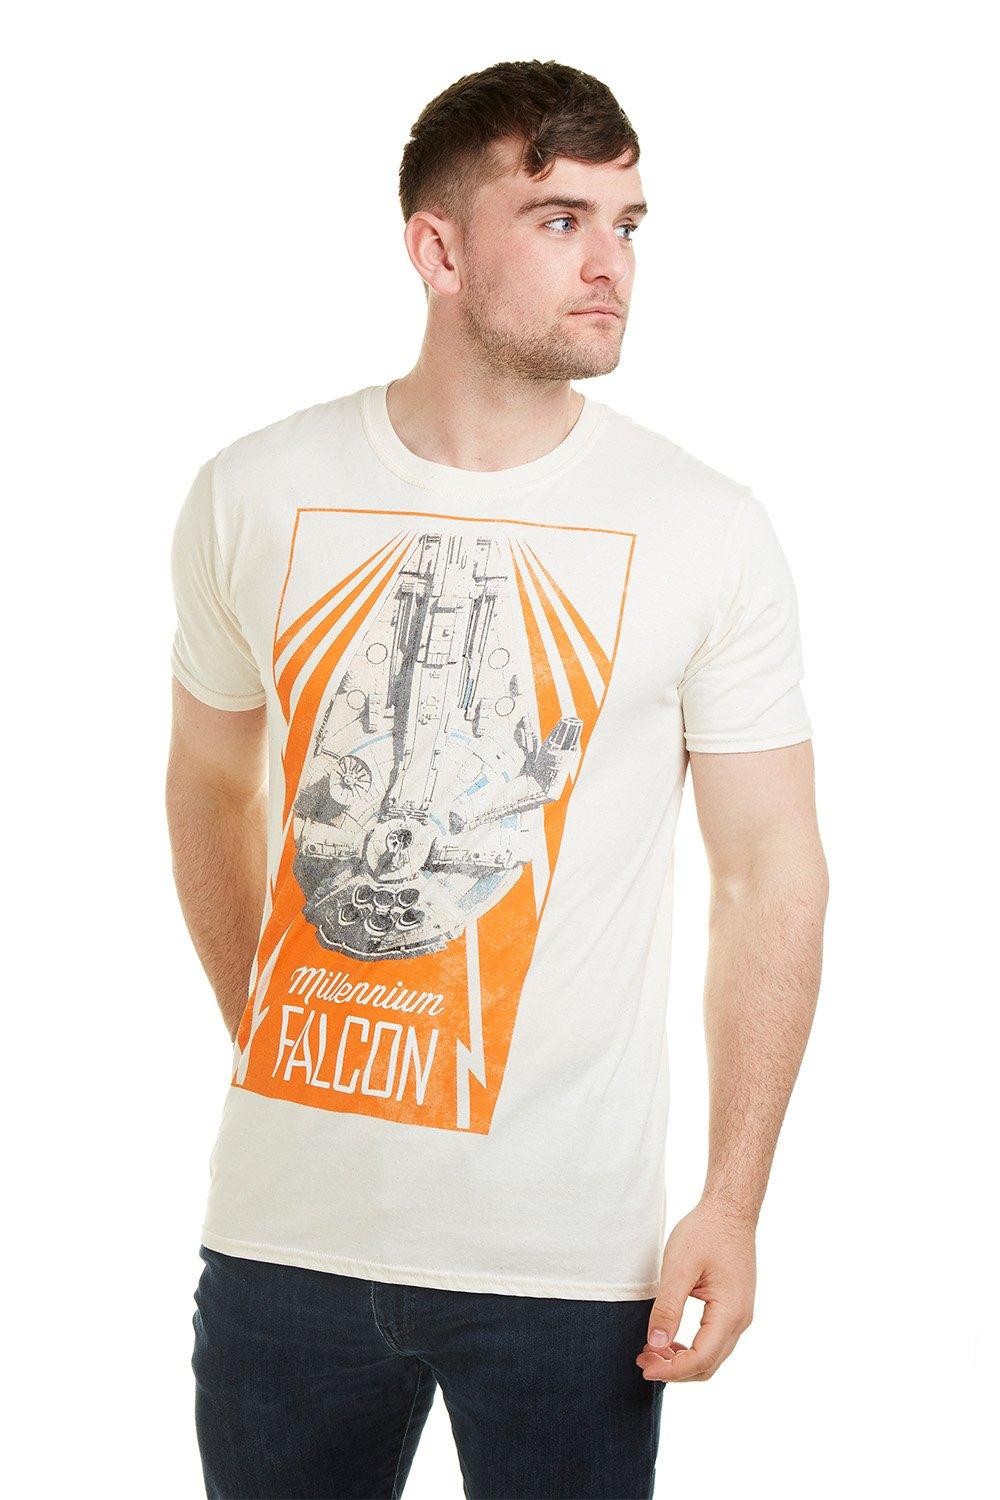 цена Новая хлопковая футболка Falcon Star Wars, белый